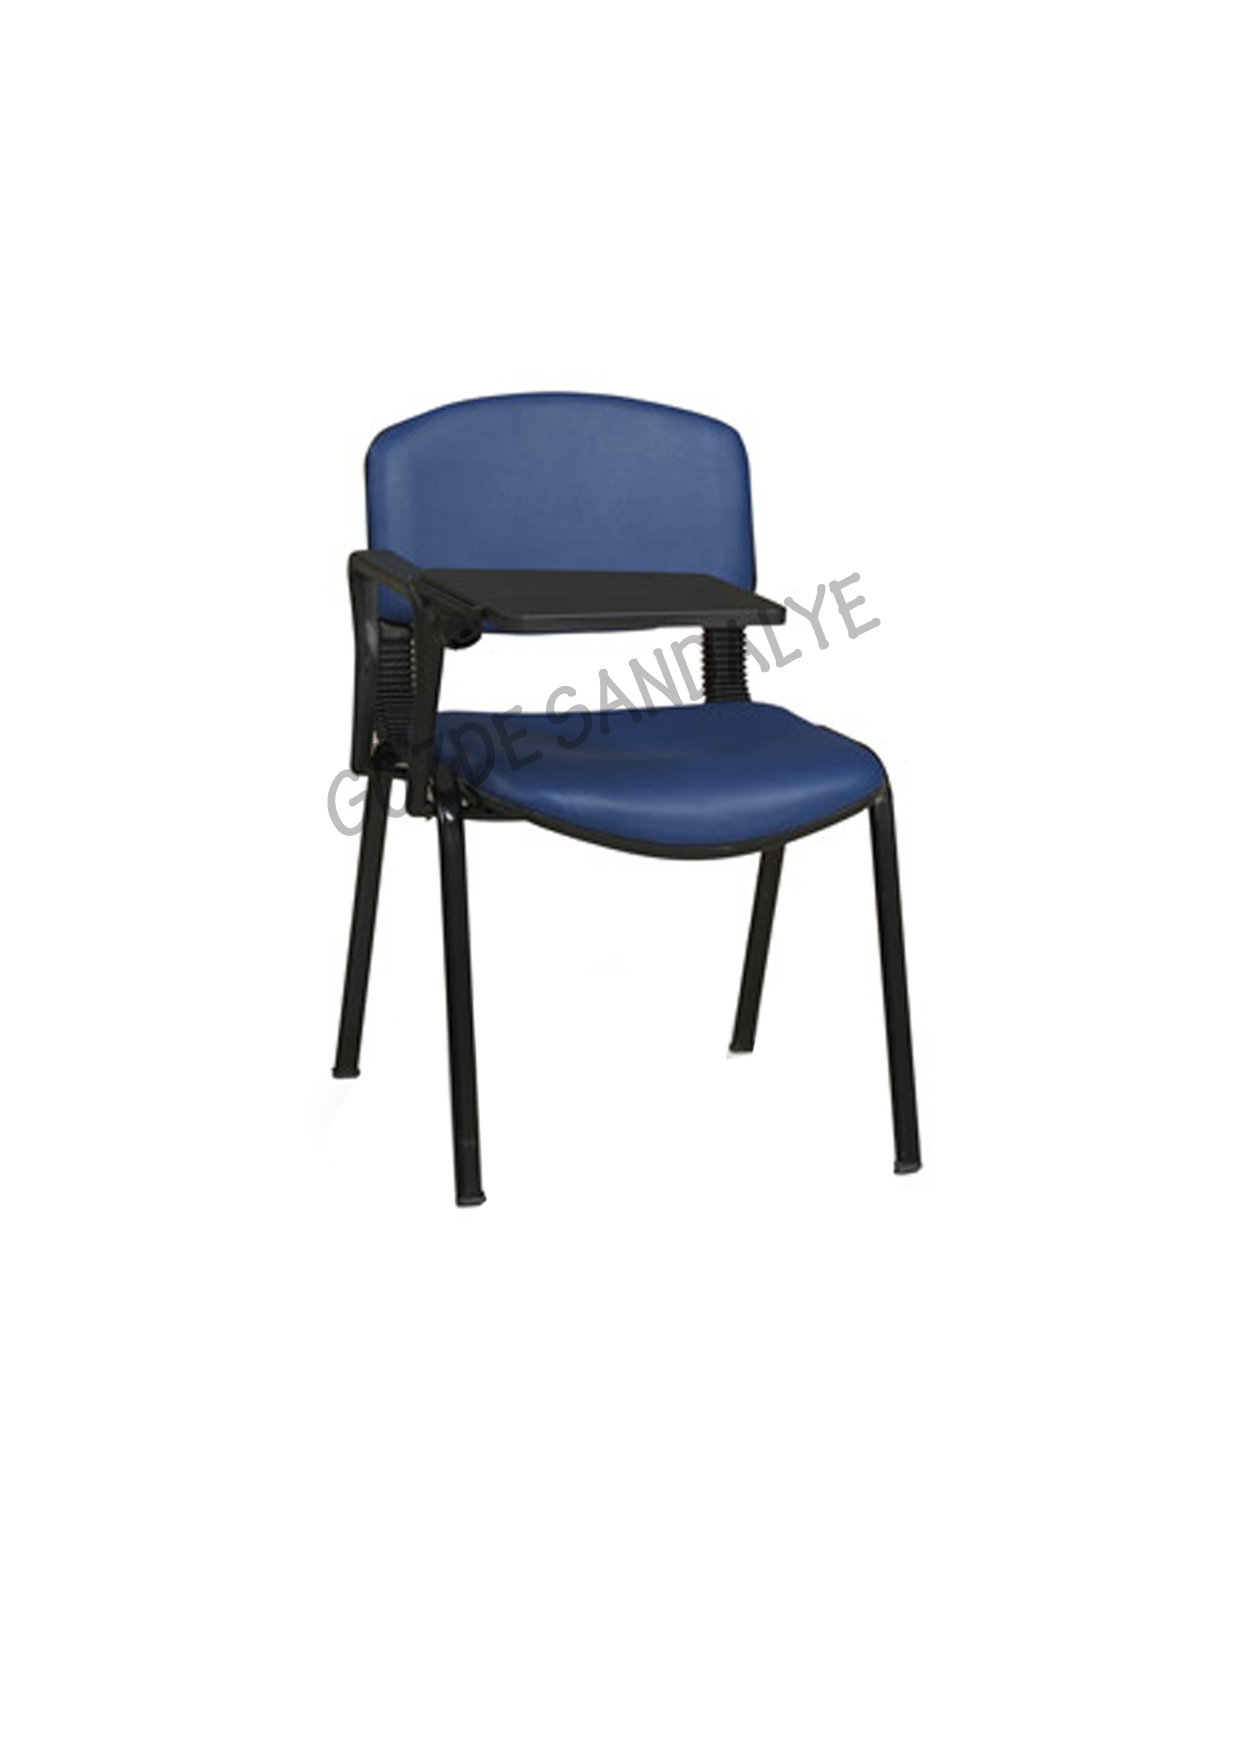 Form Sandalye Yalcinkaya Egitim Mobilyalari